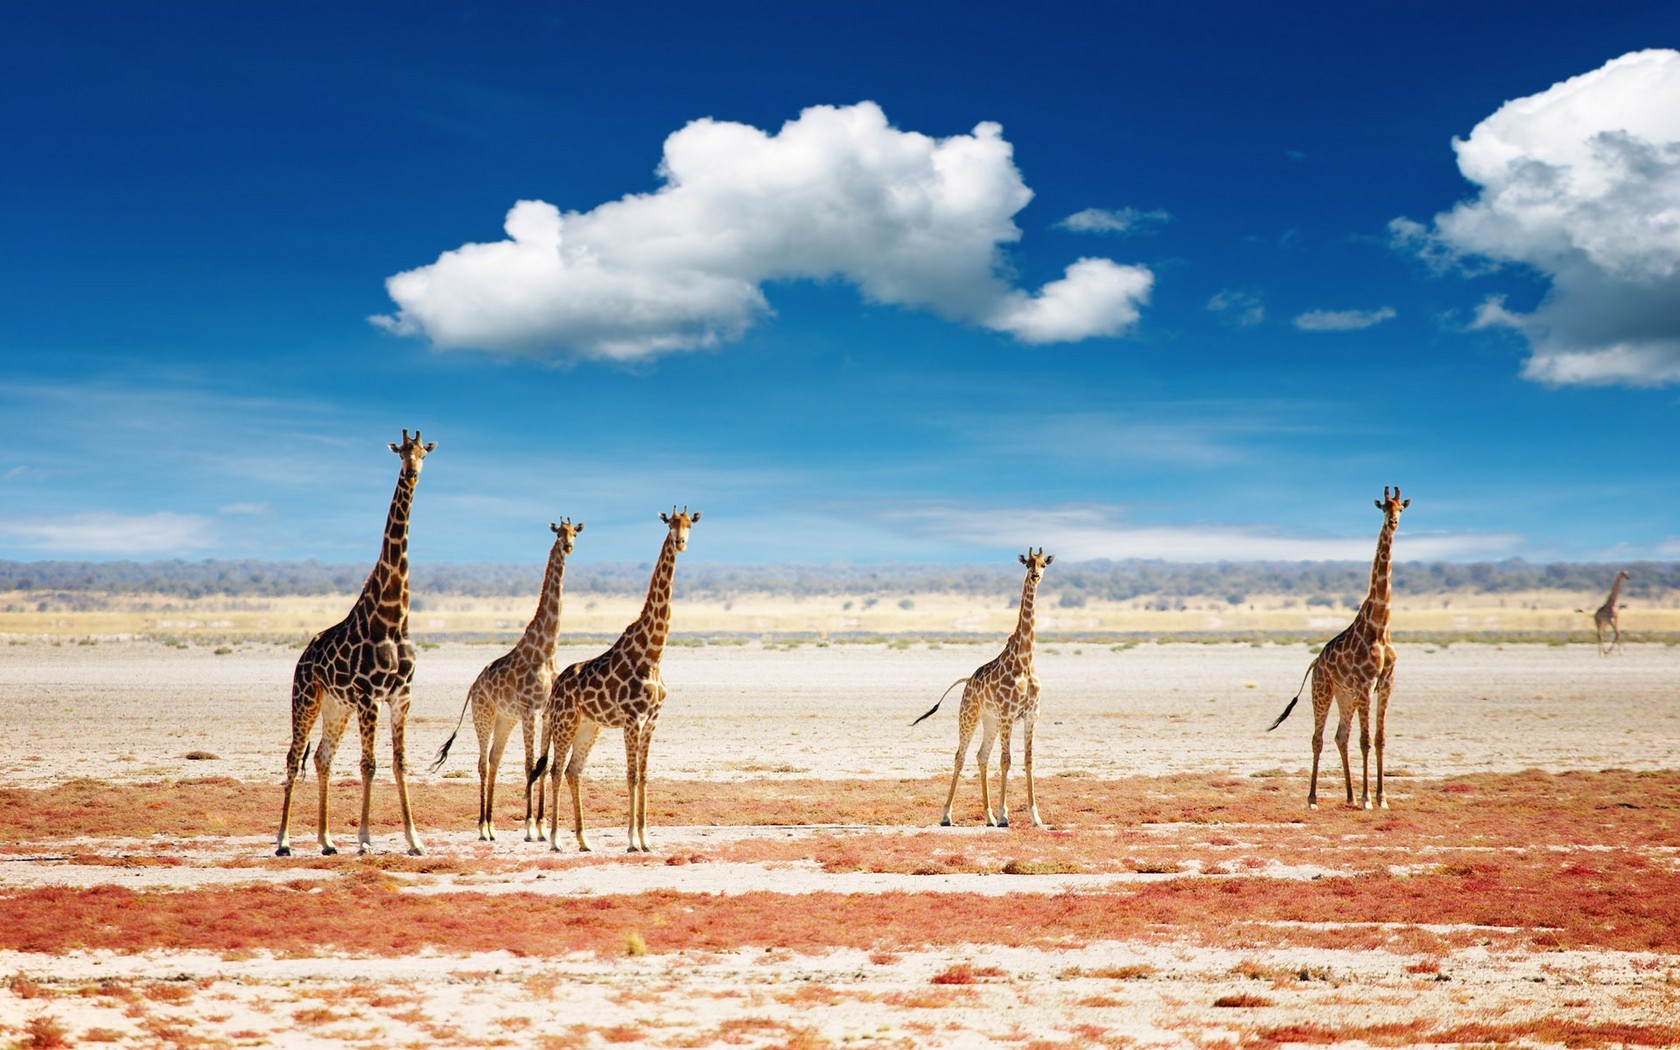 General 1680x1050 giraffes animals clouds landscape Africa nature mammals wildlife daylight savannah warm warm colors sand sky